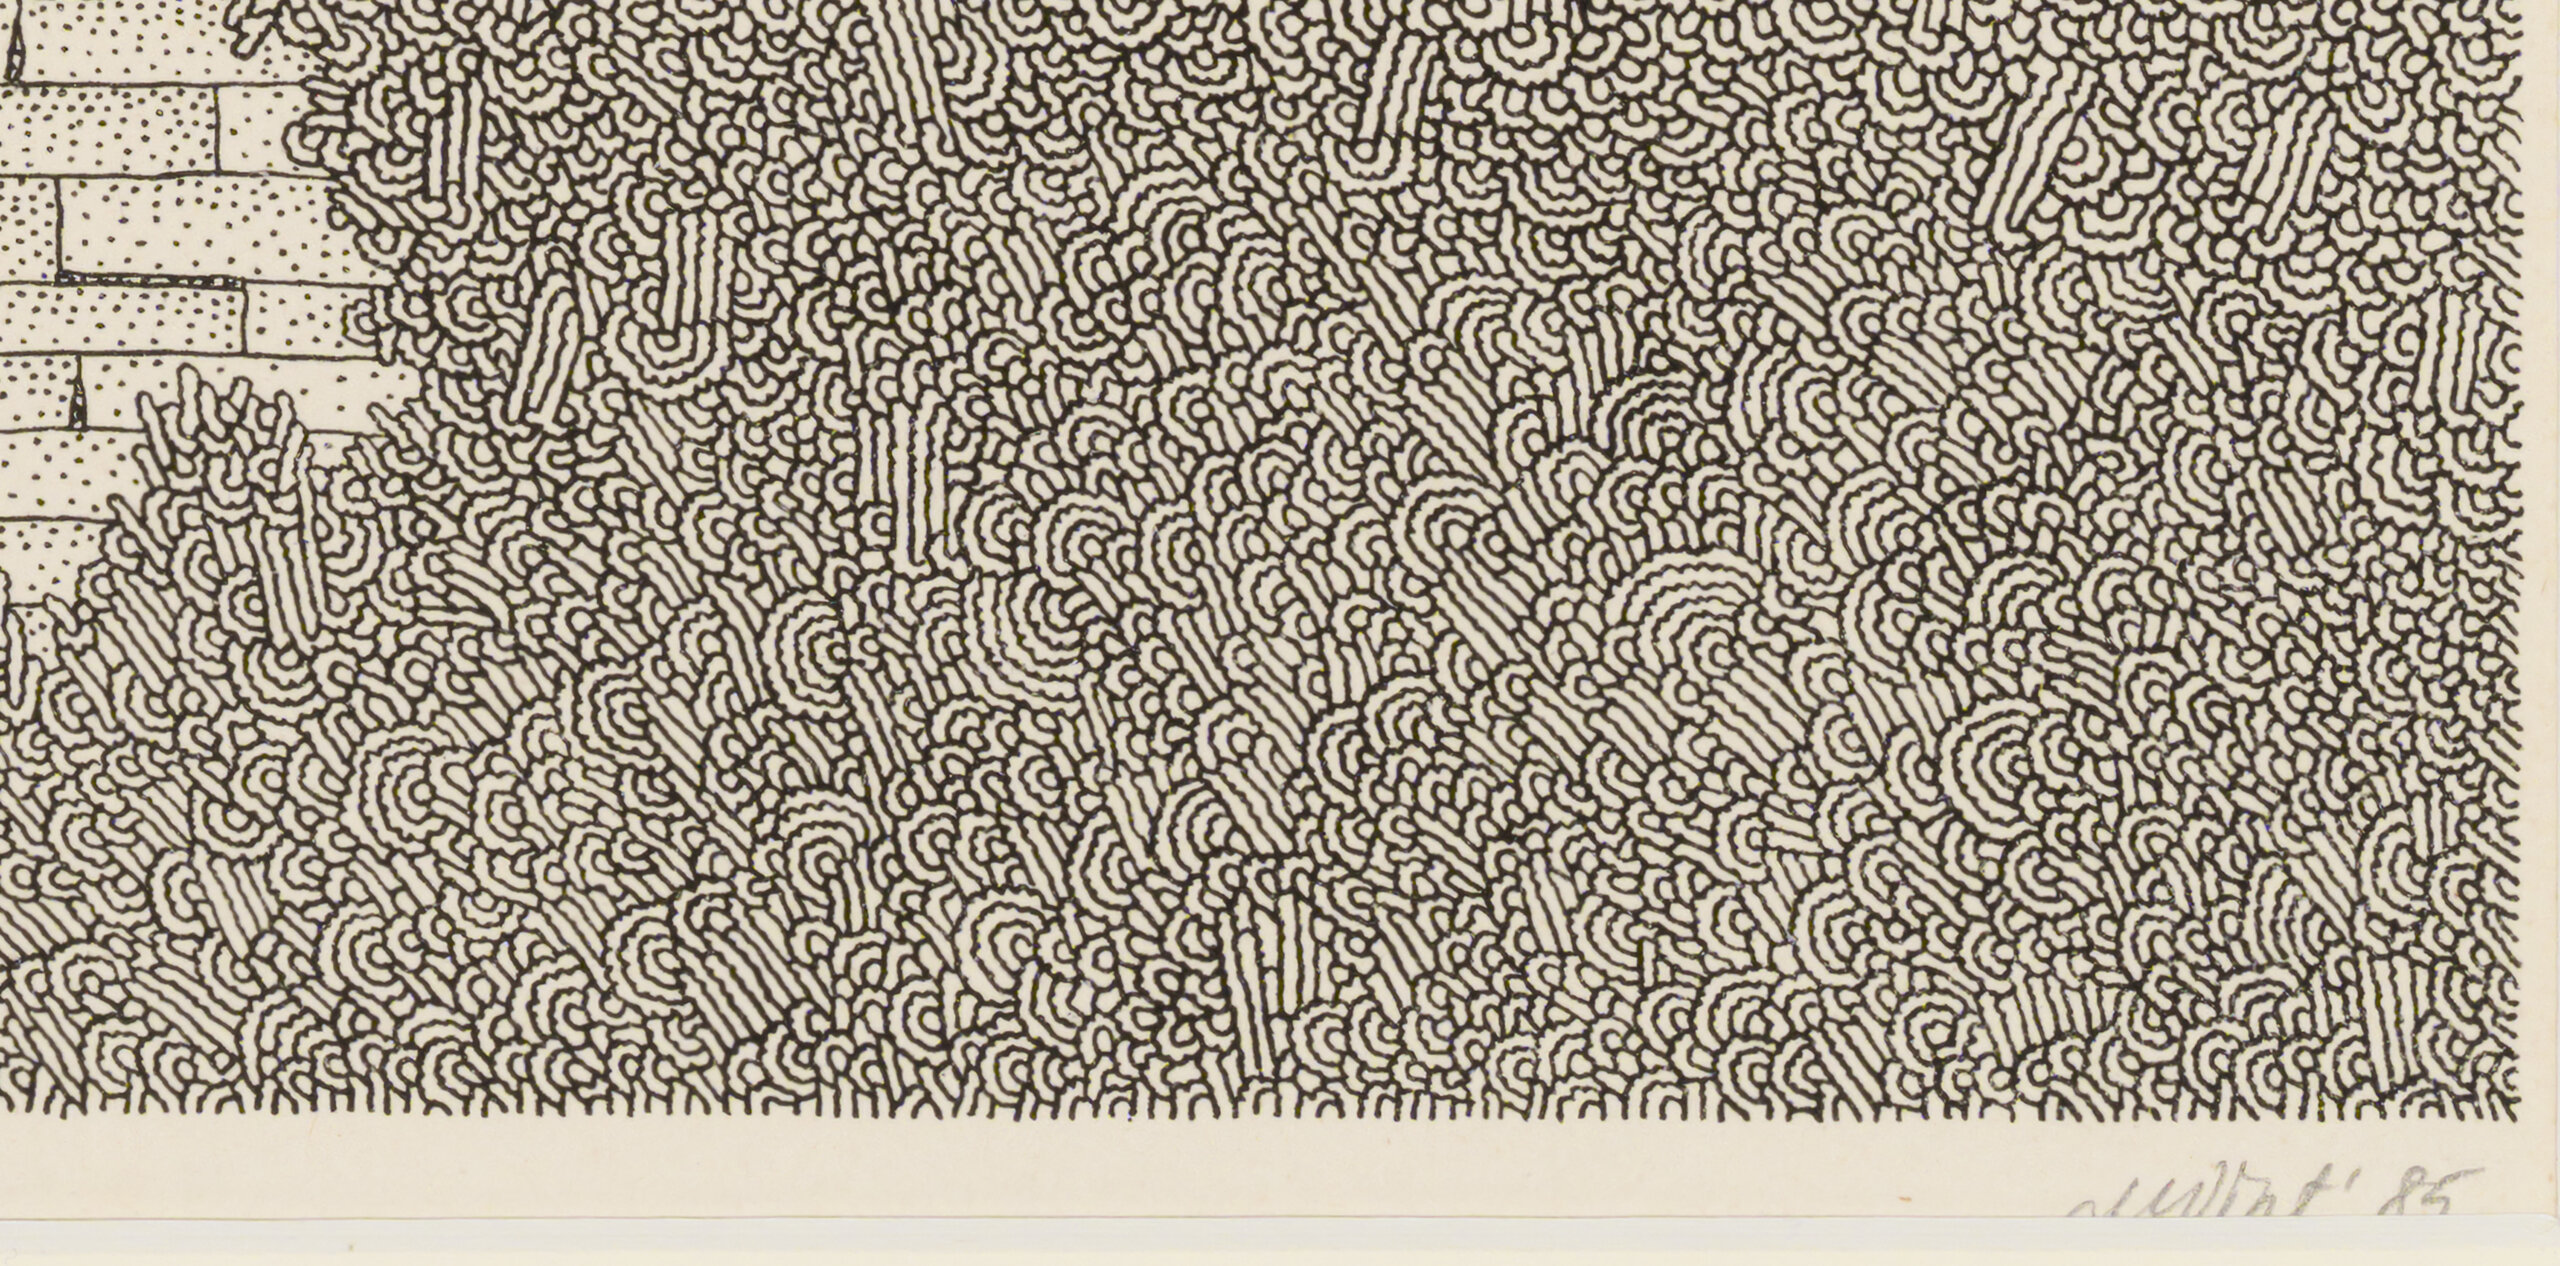 Mare Vint “Võõras rand” 1985. Lm 69 x 67,5 cm.